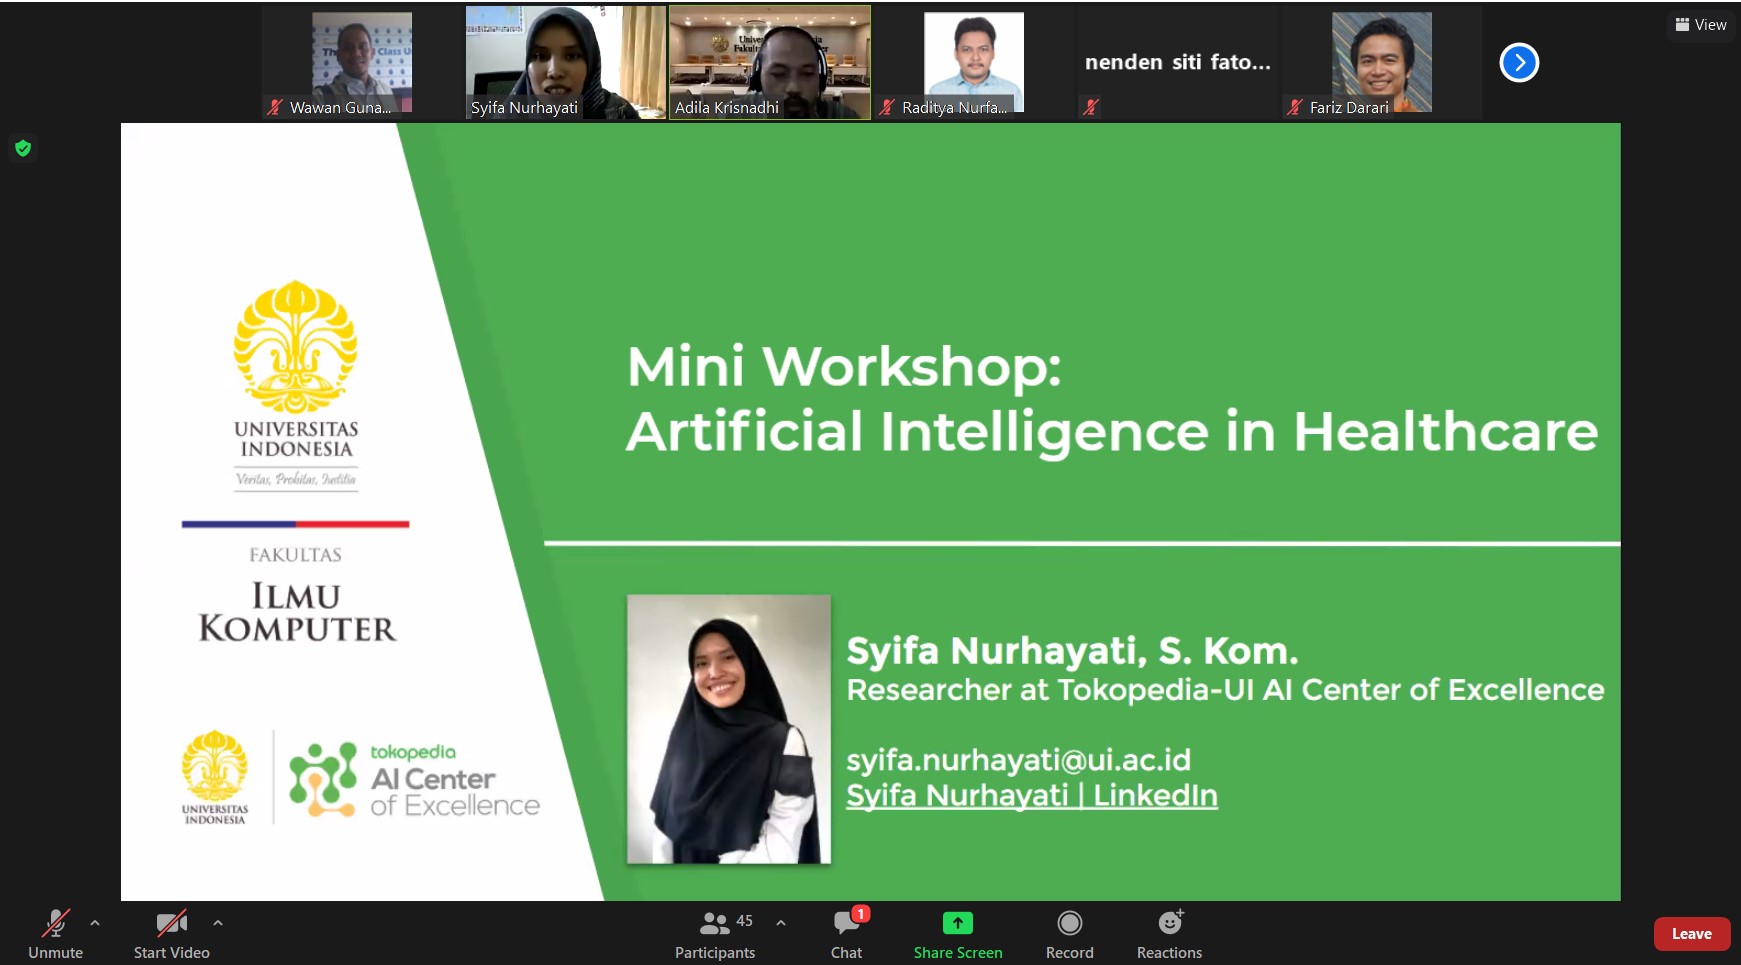 Mini Workshop: Artificial Intelligence in Healthcare